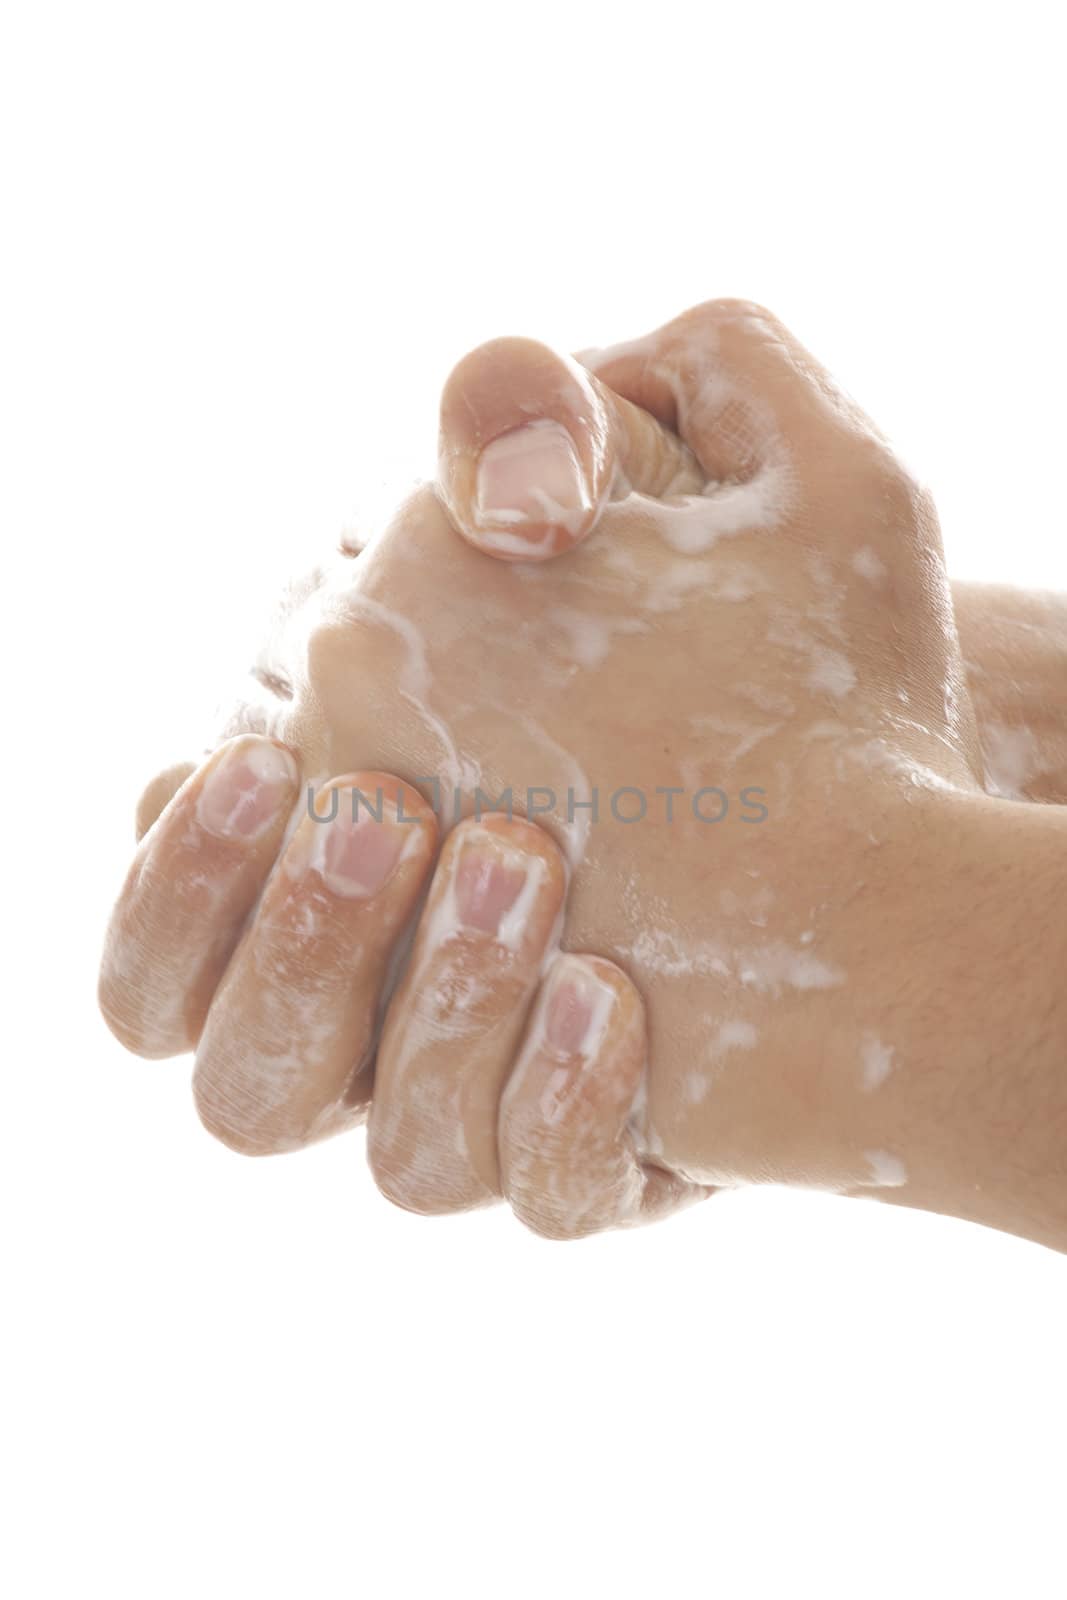 Close up image of washing hand against white background